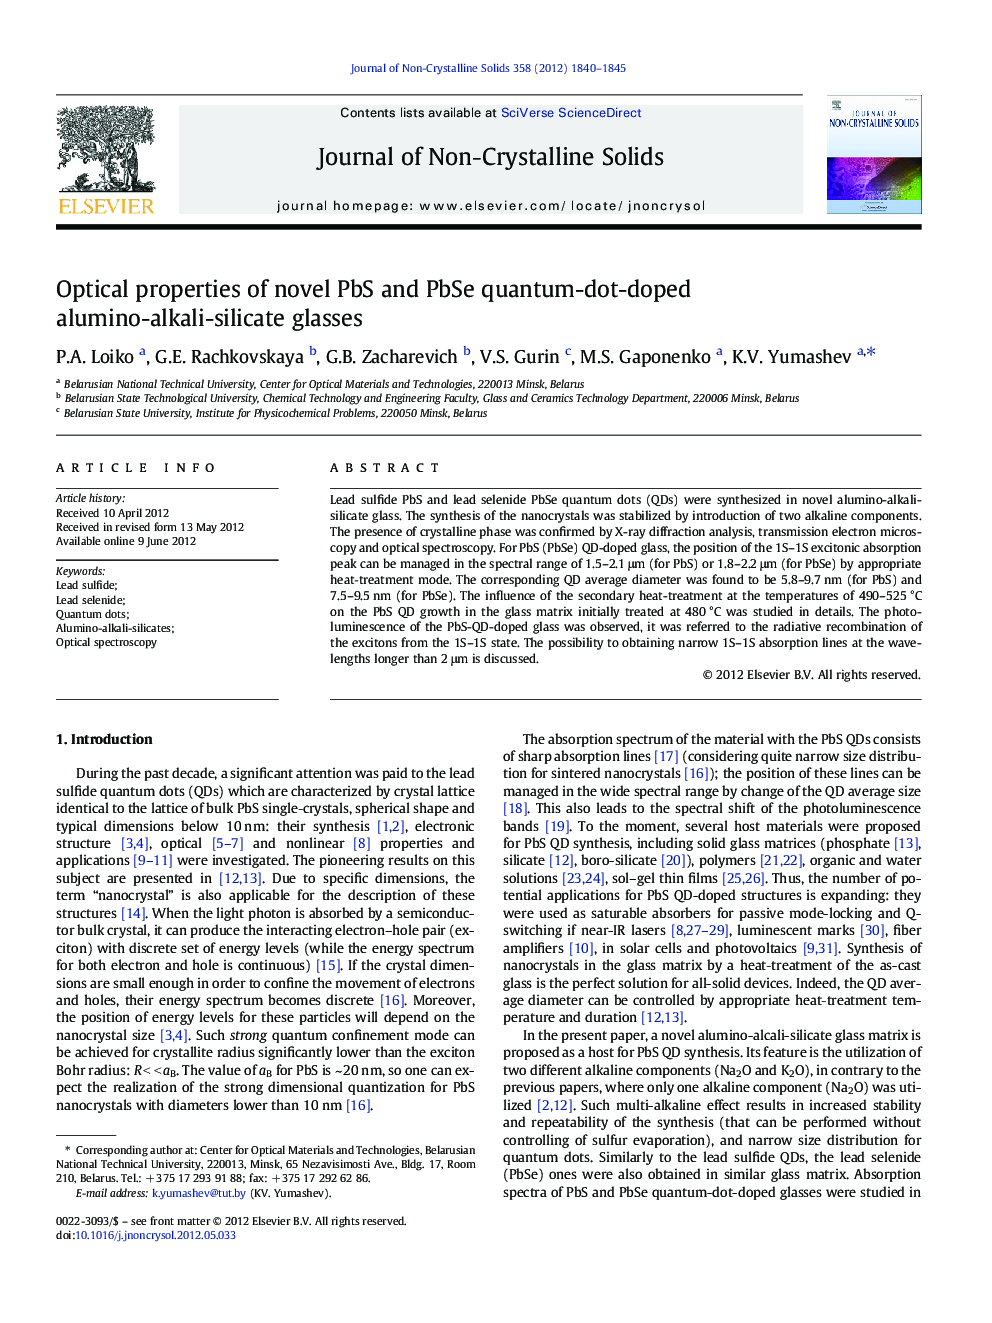 Optical properties of novel PbS and PbSe quantum-dot-doped alumino-alkali-silicate glasses